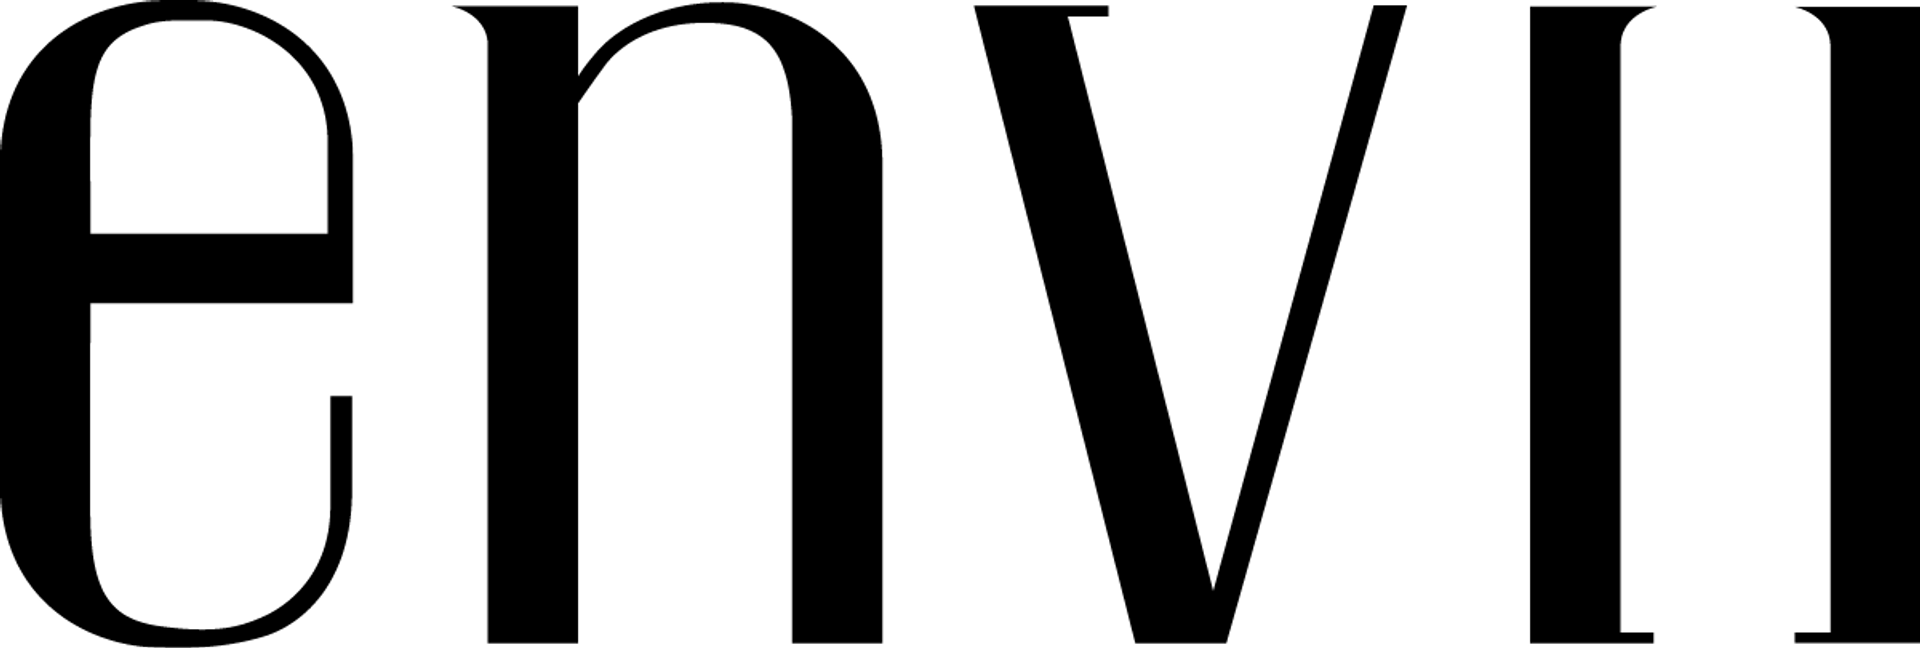 ENVII logo of current catalogue